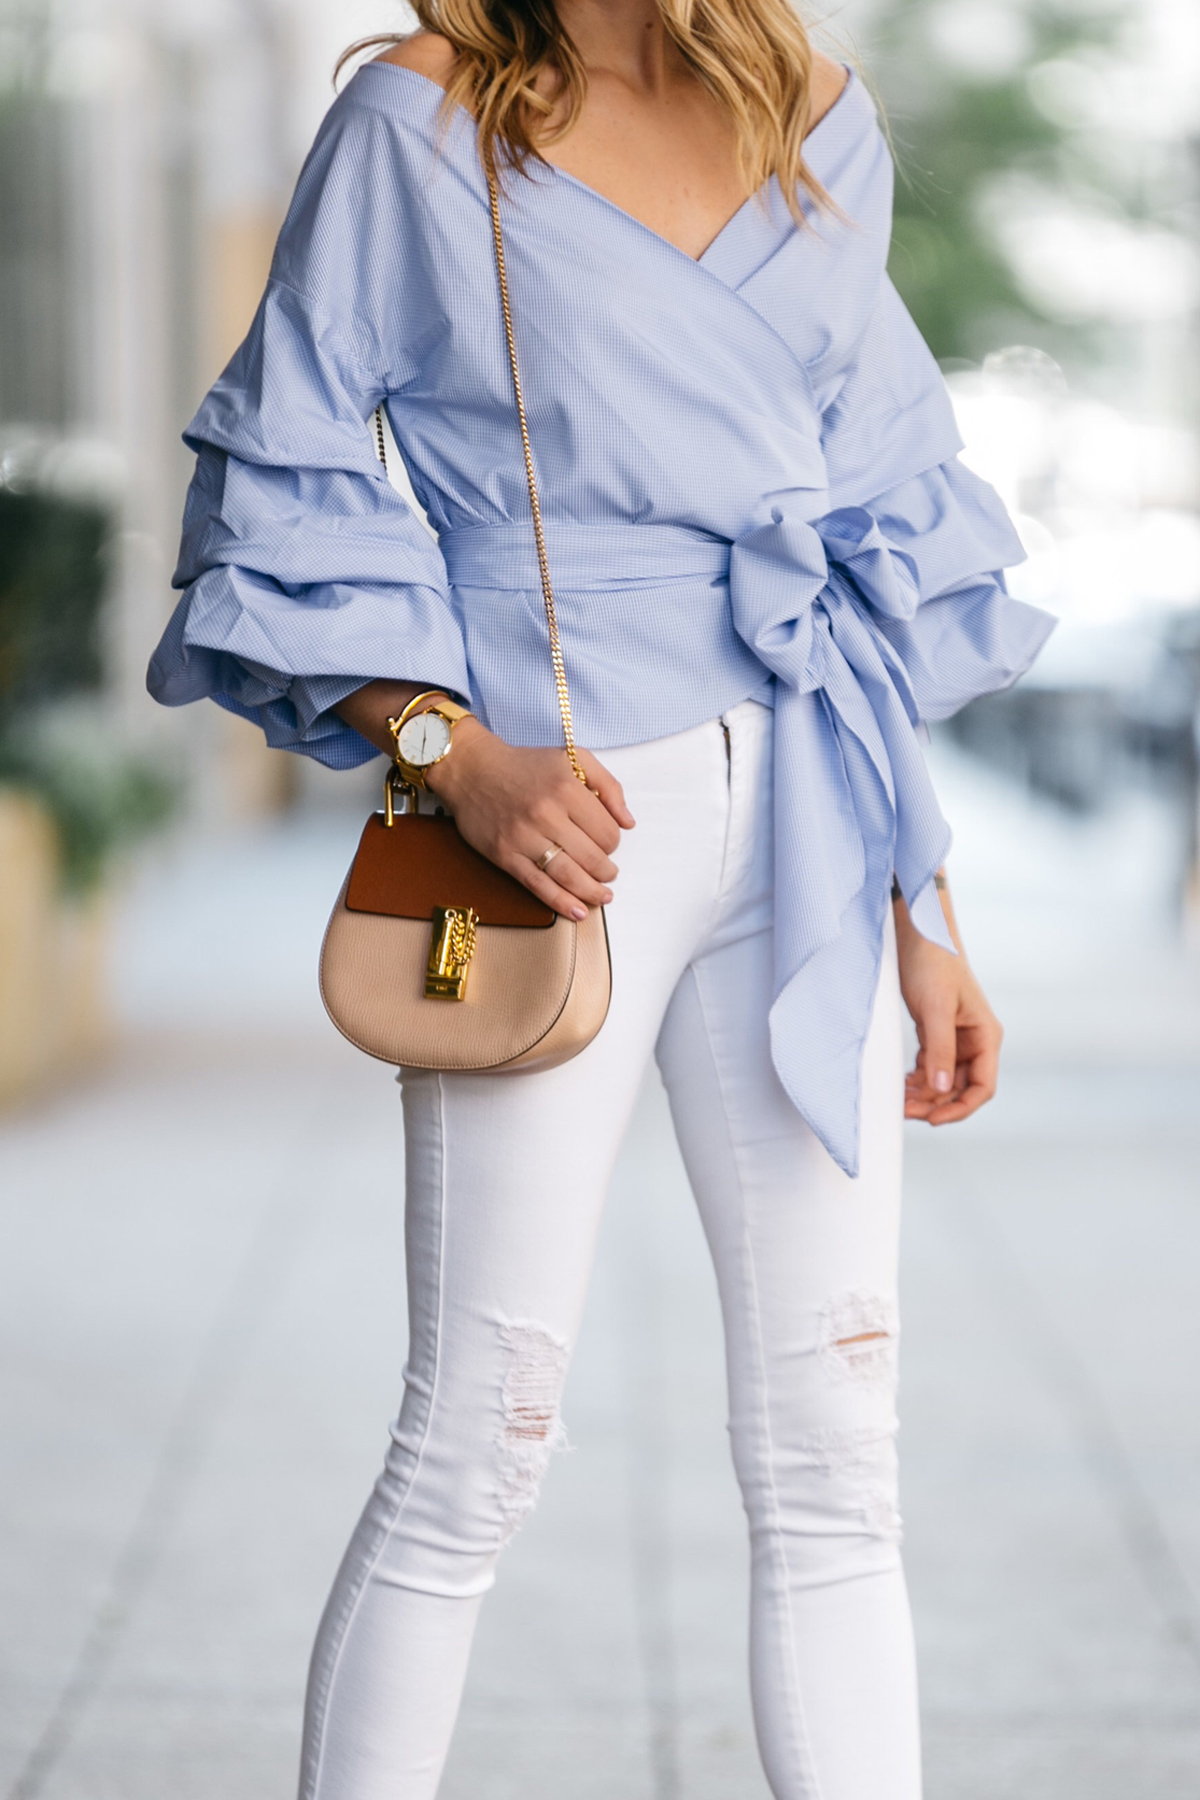 Fashion Jackson, Dallas Blogger, Fashion Blogger, Street Style, Blue Ruffle Sleeve Top, James Jeans White Skinny Jeans, Chloe Drew Blush Handbag